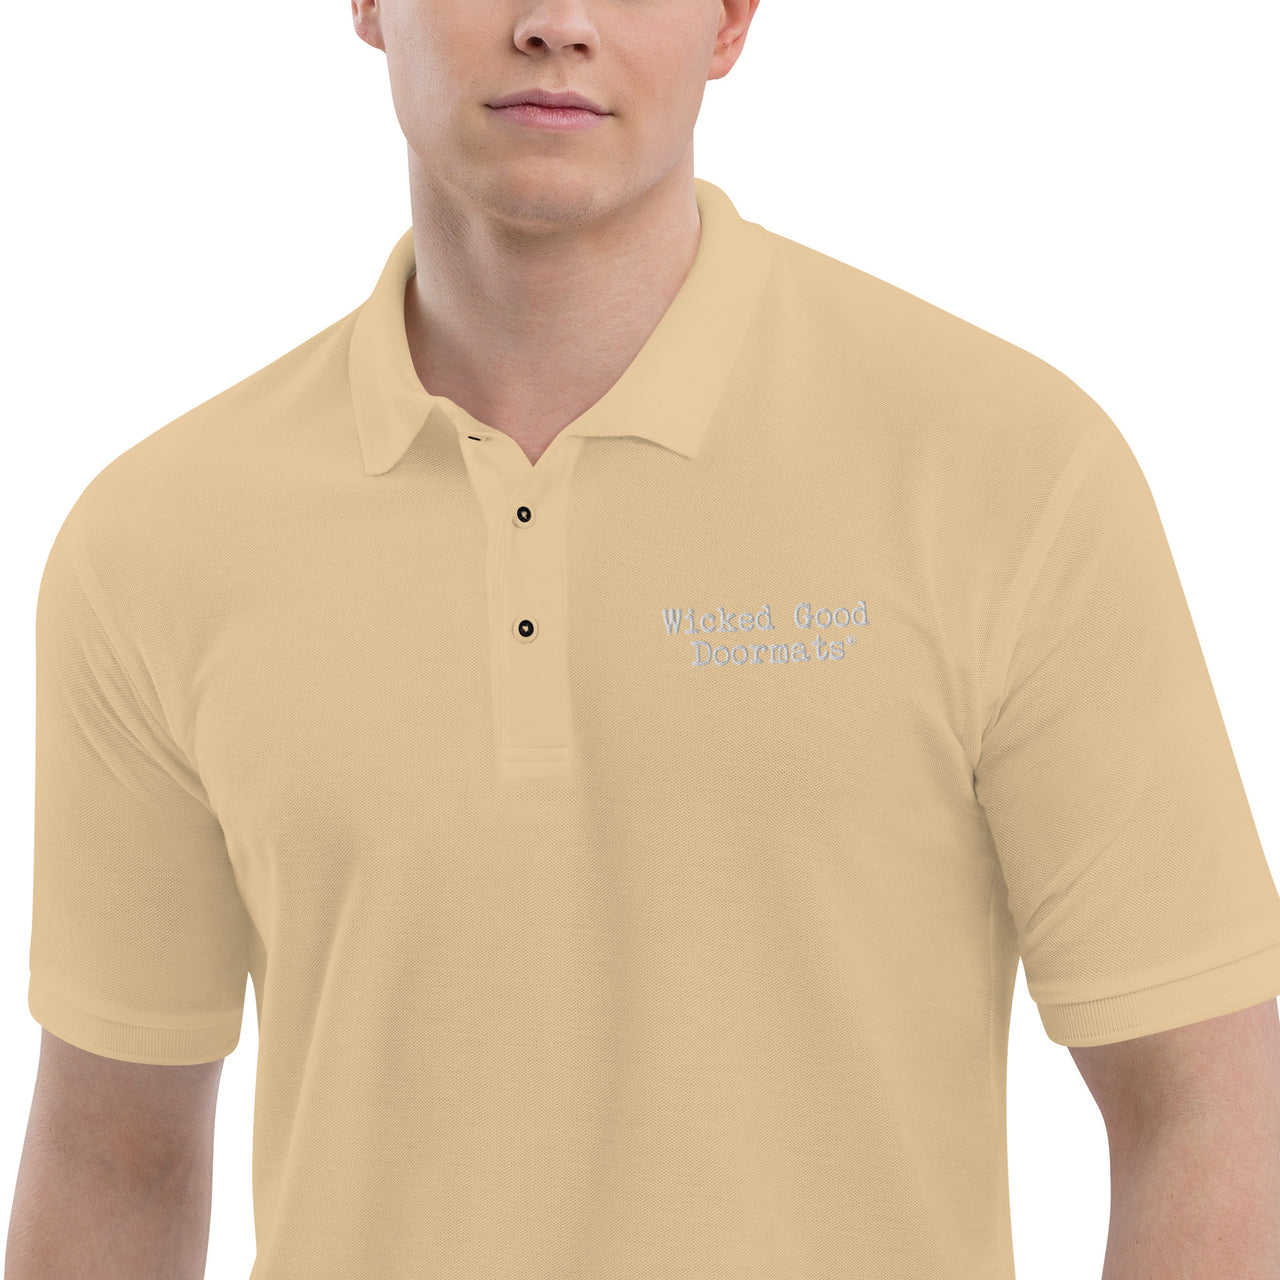 Men's Premium Polo Shirts & Tops New England Trading Co Stone S 